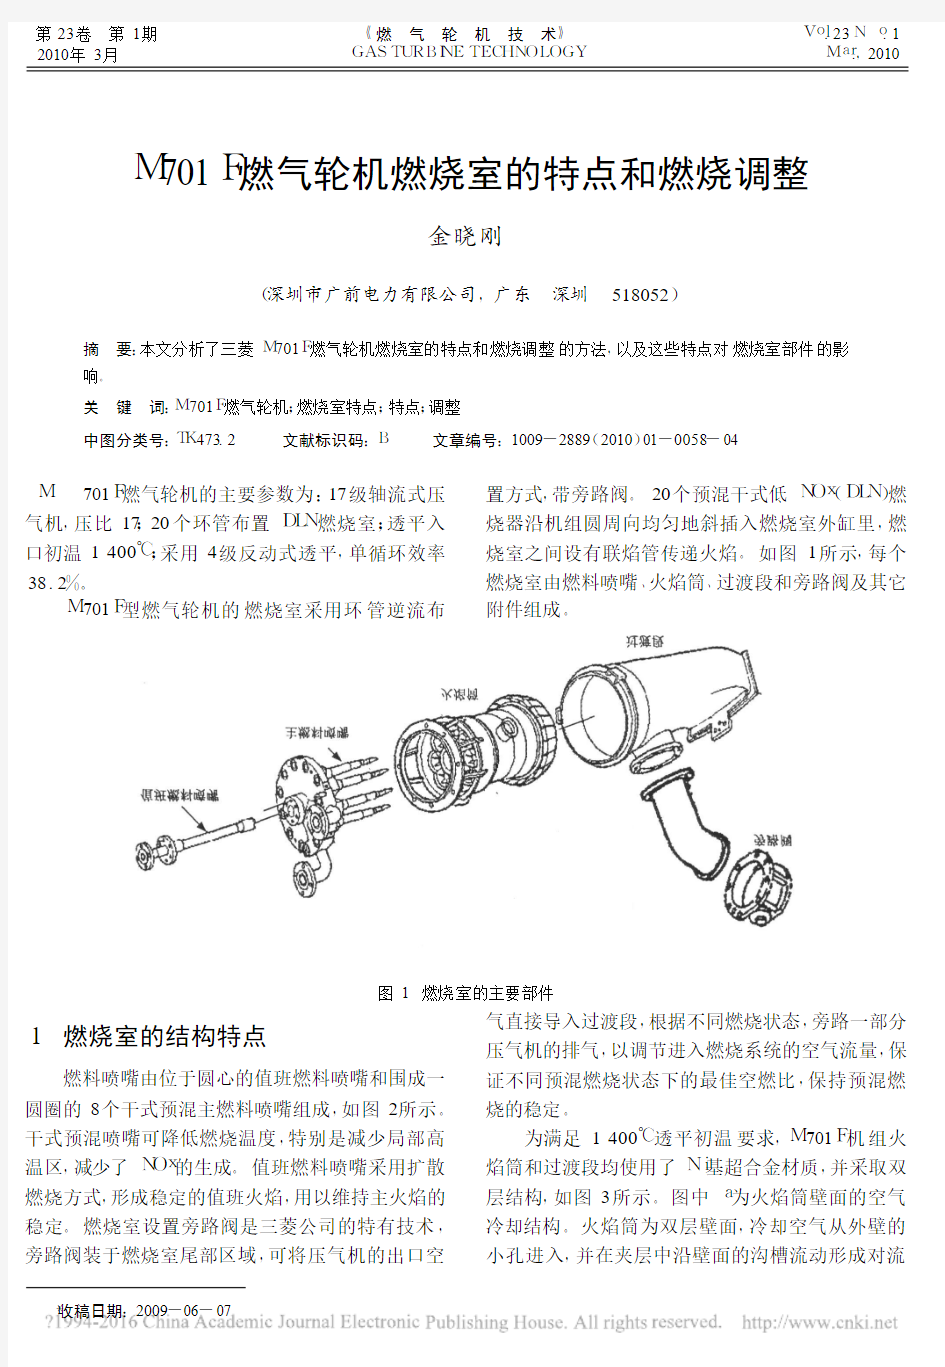 M701F燃气轮机燃烧室的特点和燃烧调整_金晓刚(1)